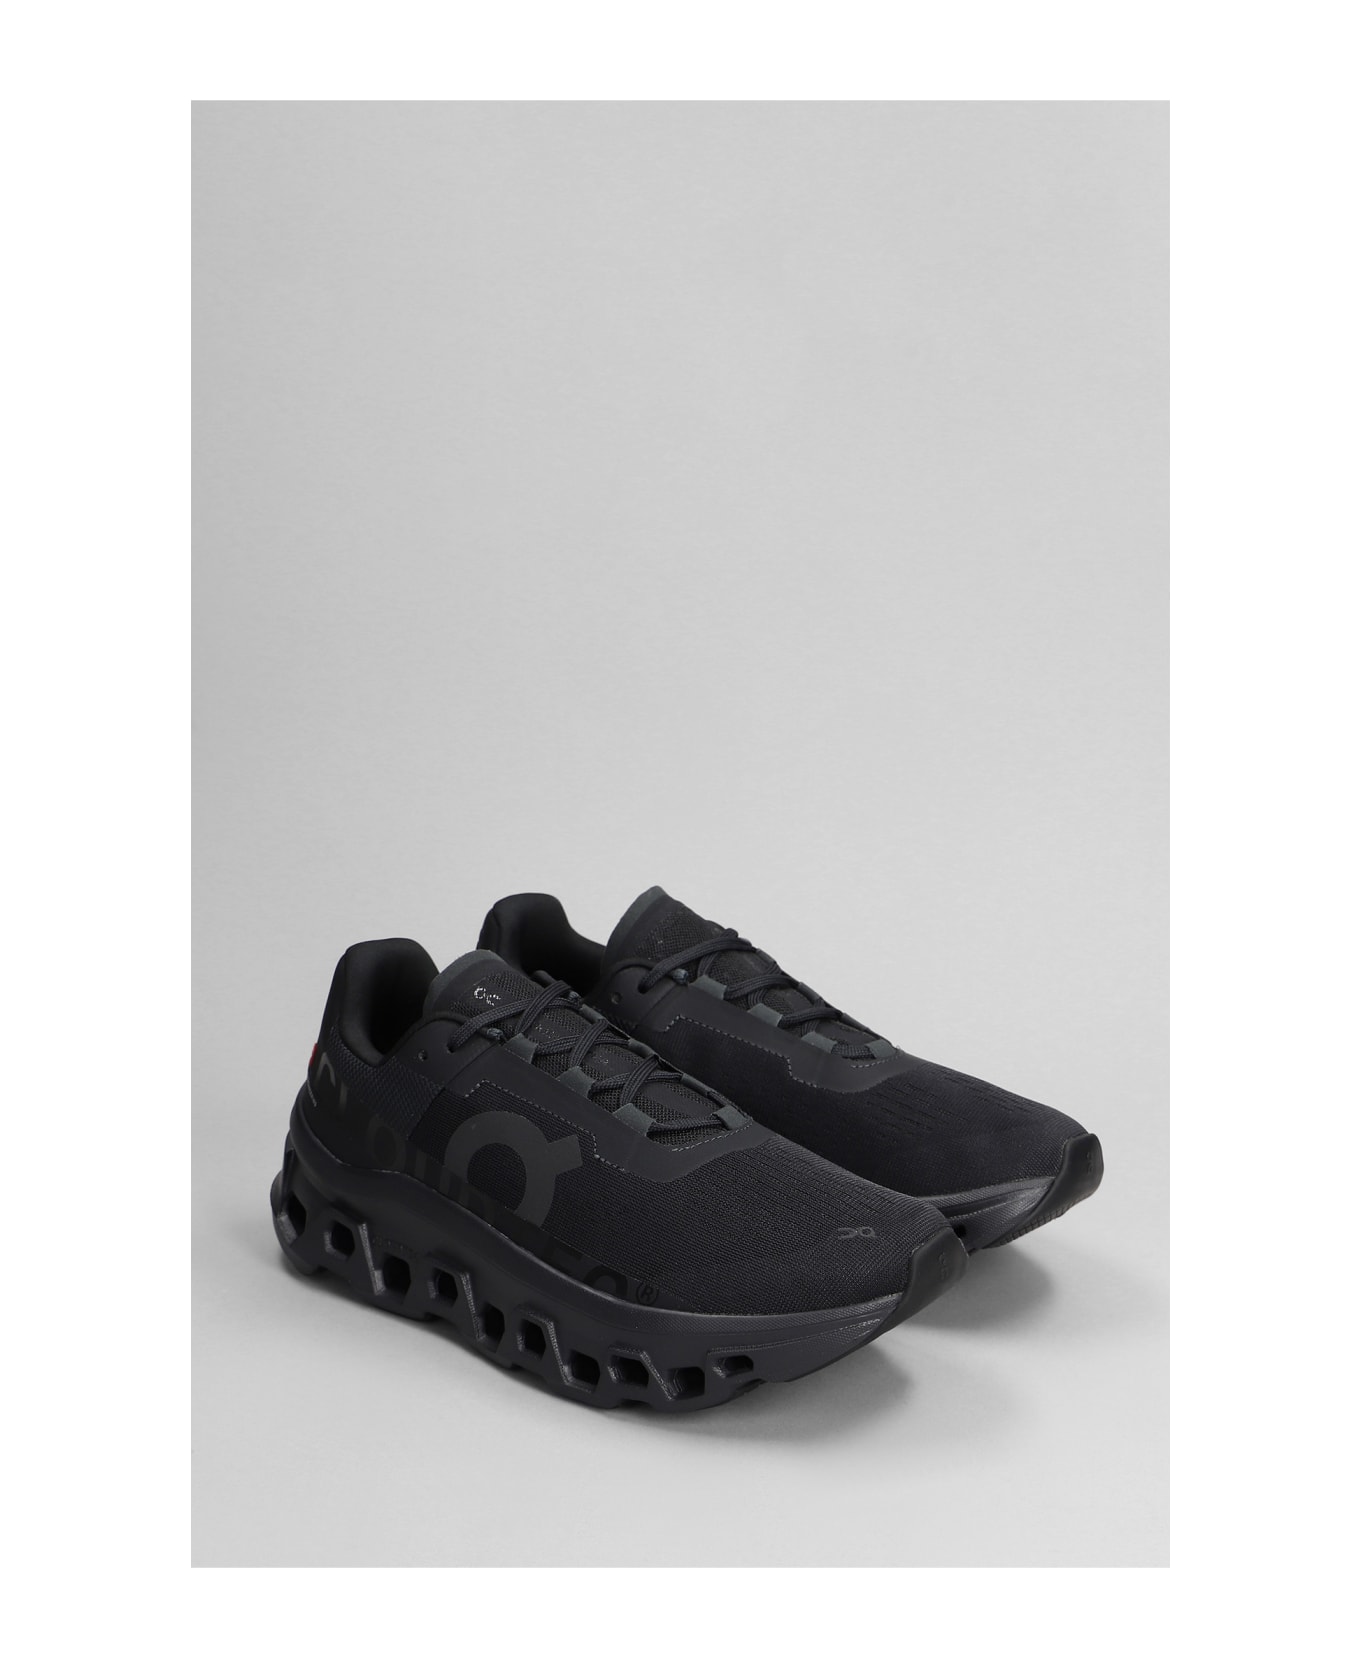 ON Cloudmonster Sneakers In Black Polyester - black スニーカー